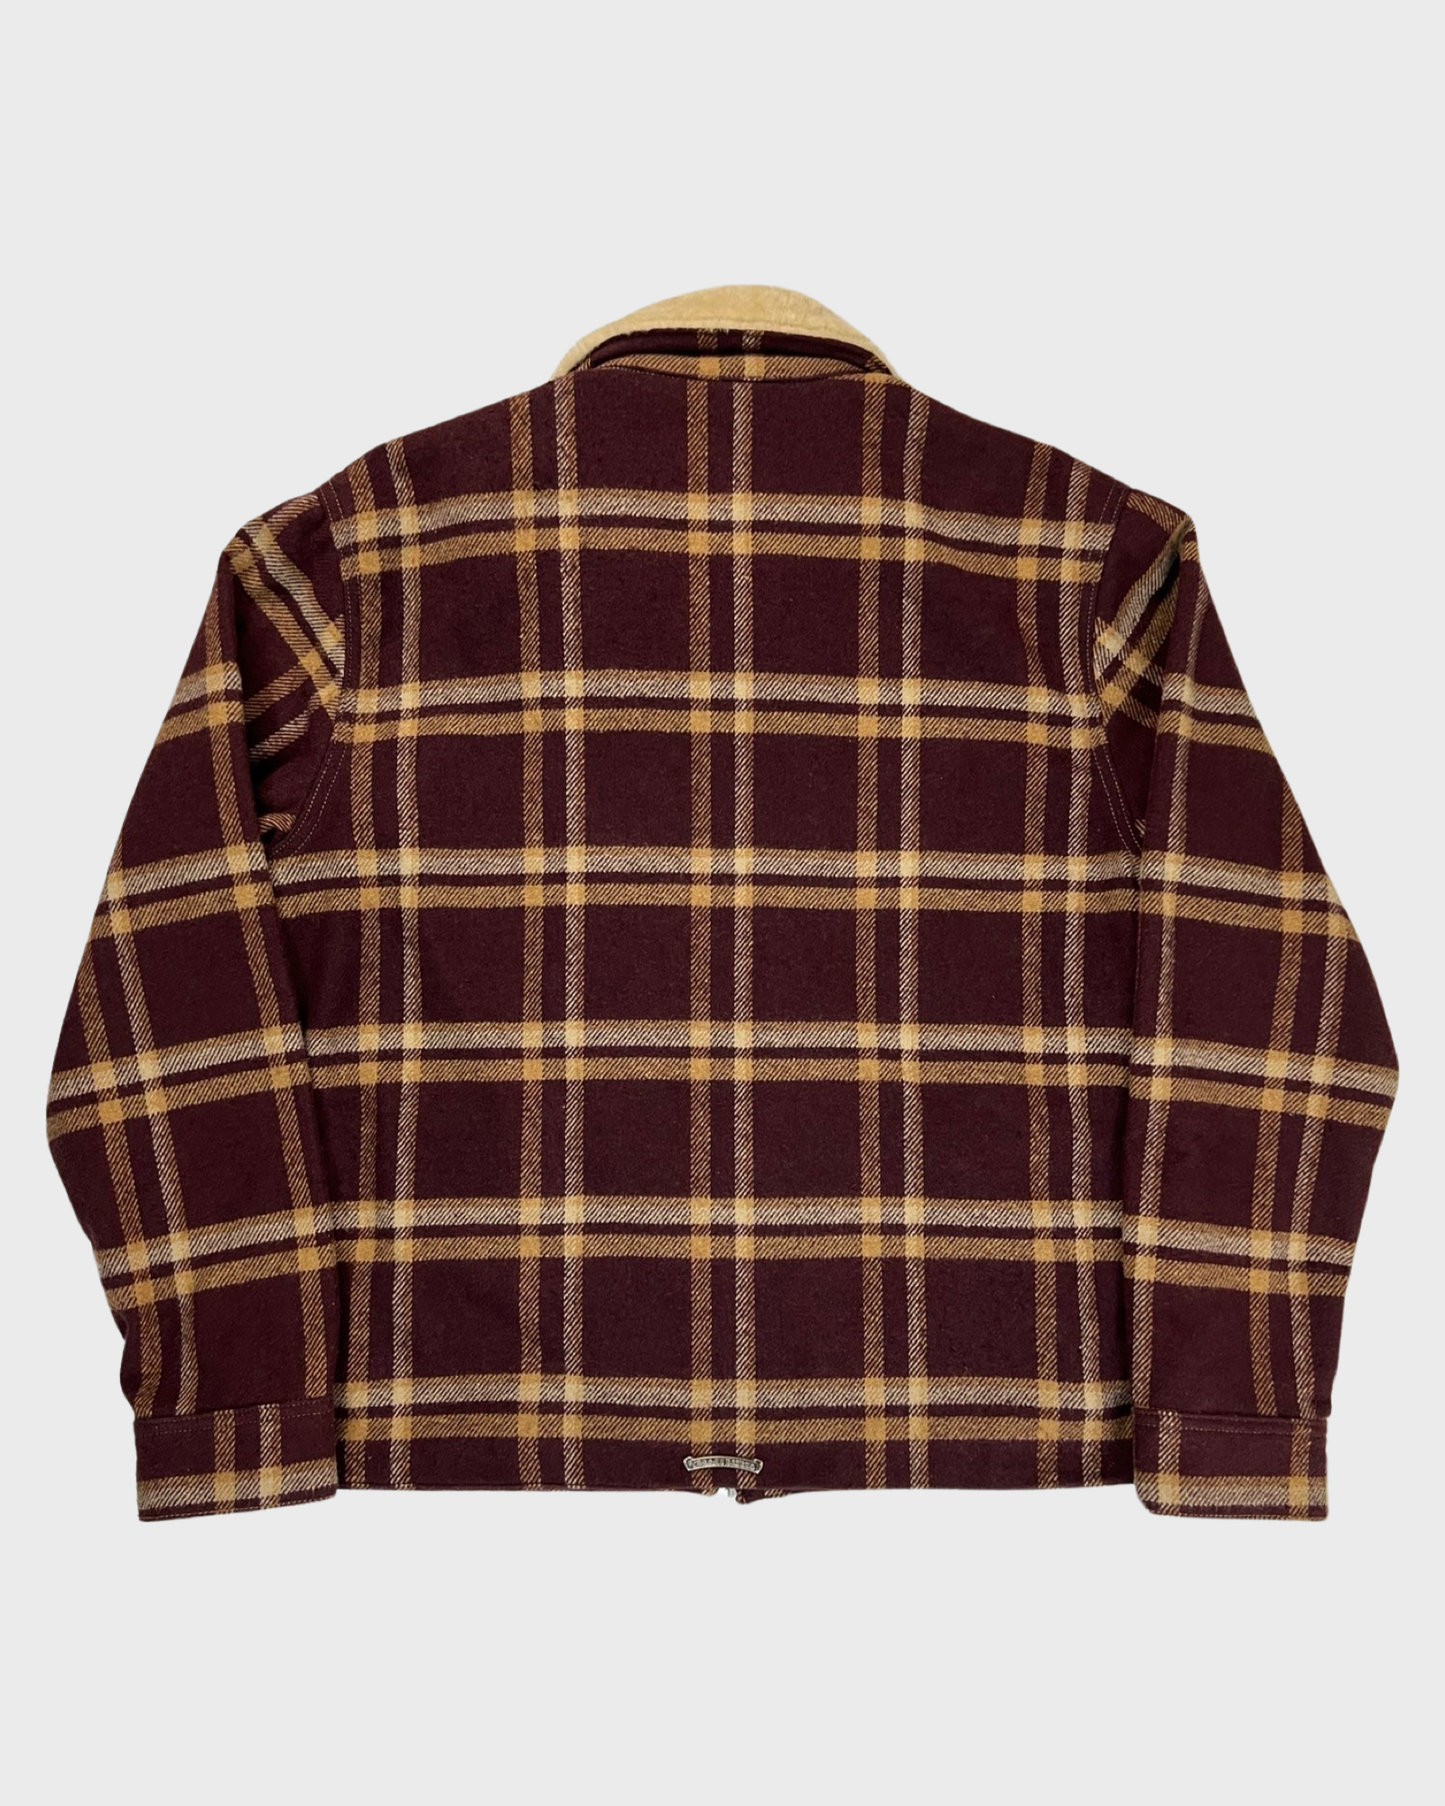 Chrome Hearts workdog Shearling collar plaid flannel Jacket SZ:M